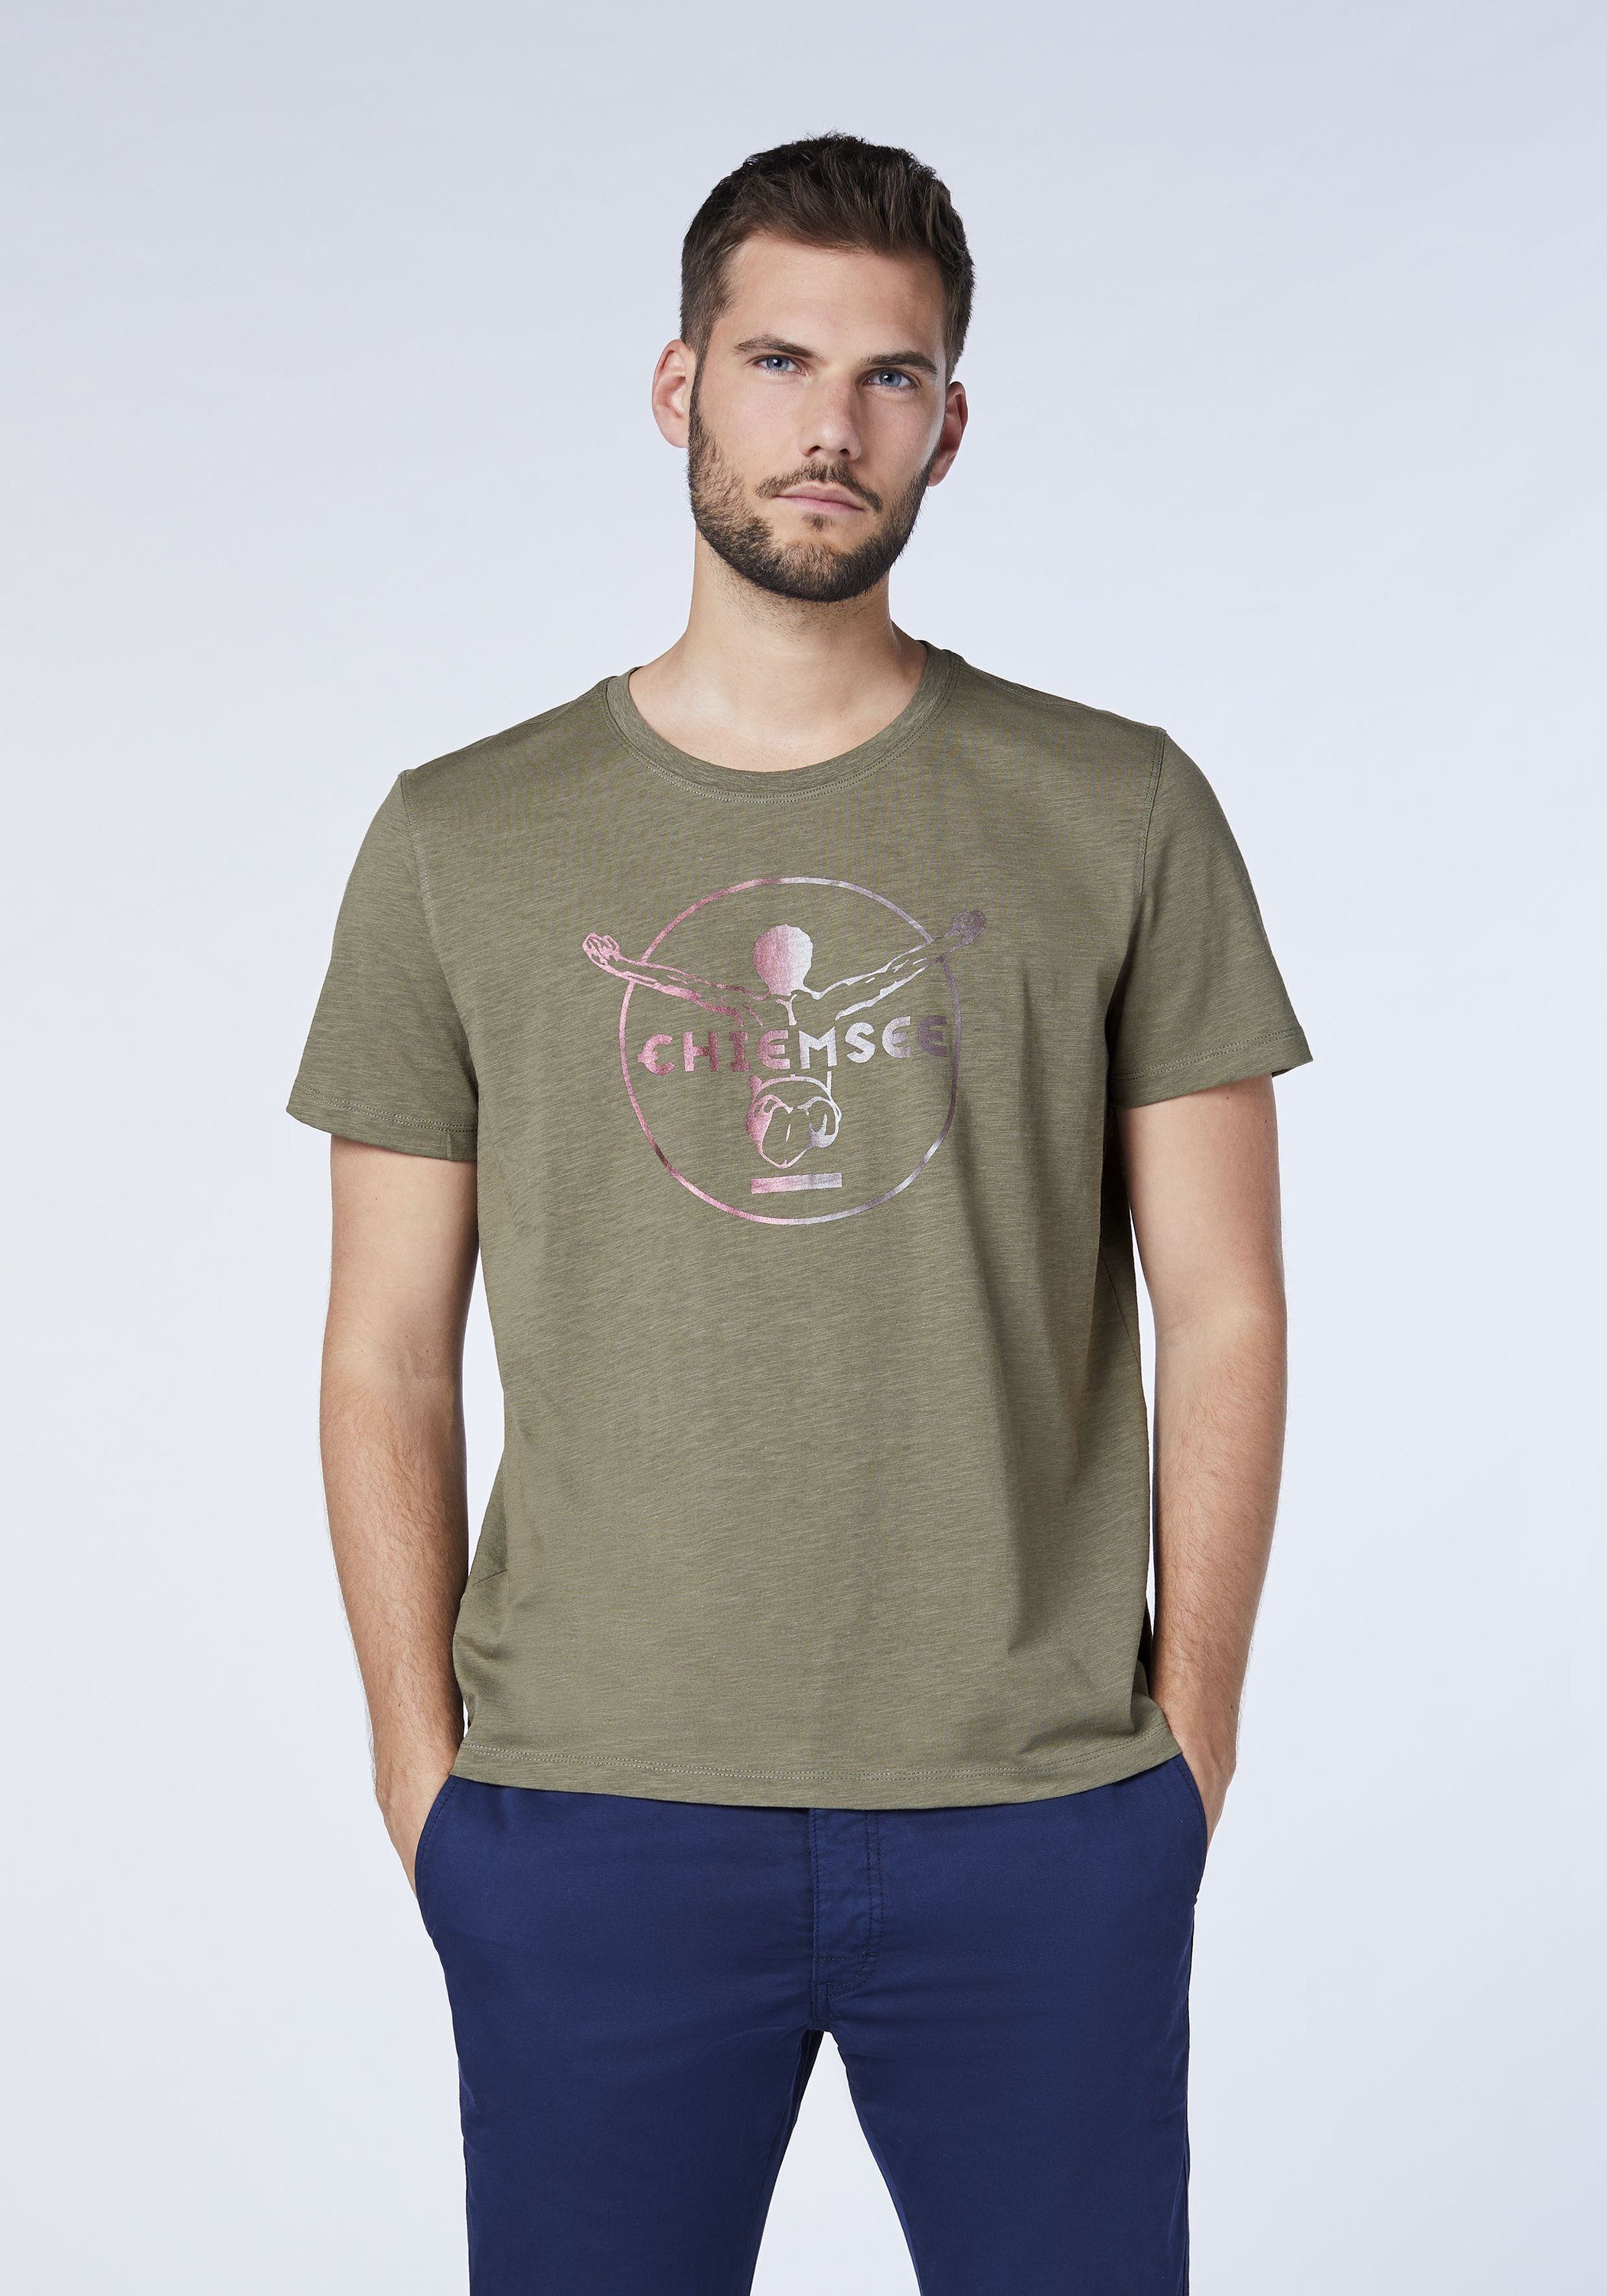 Chiemsee Print-Shirt T-Shirt Label-Symbol gedrucktem 1 Dusty Olive mit